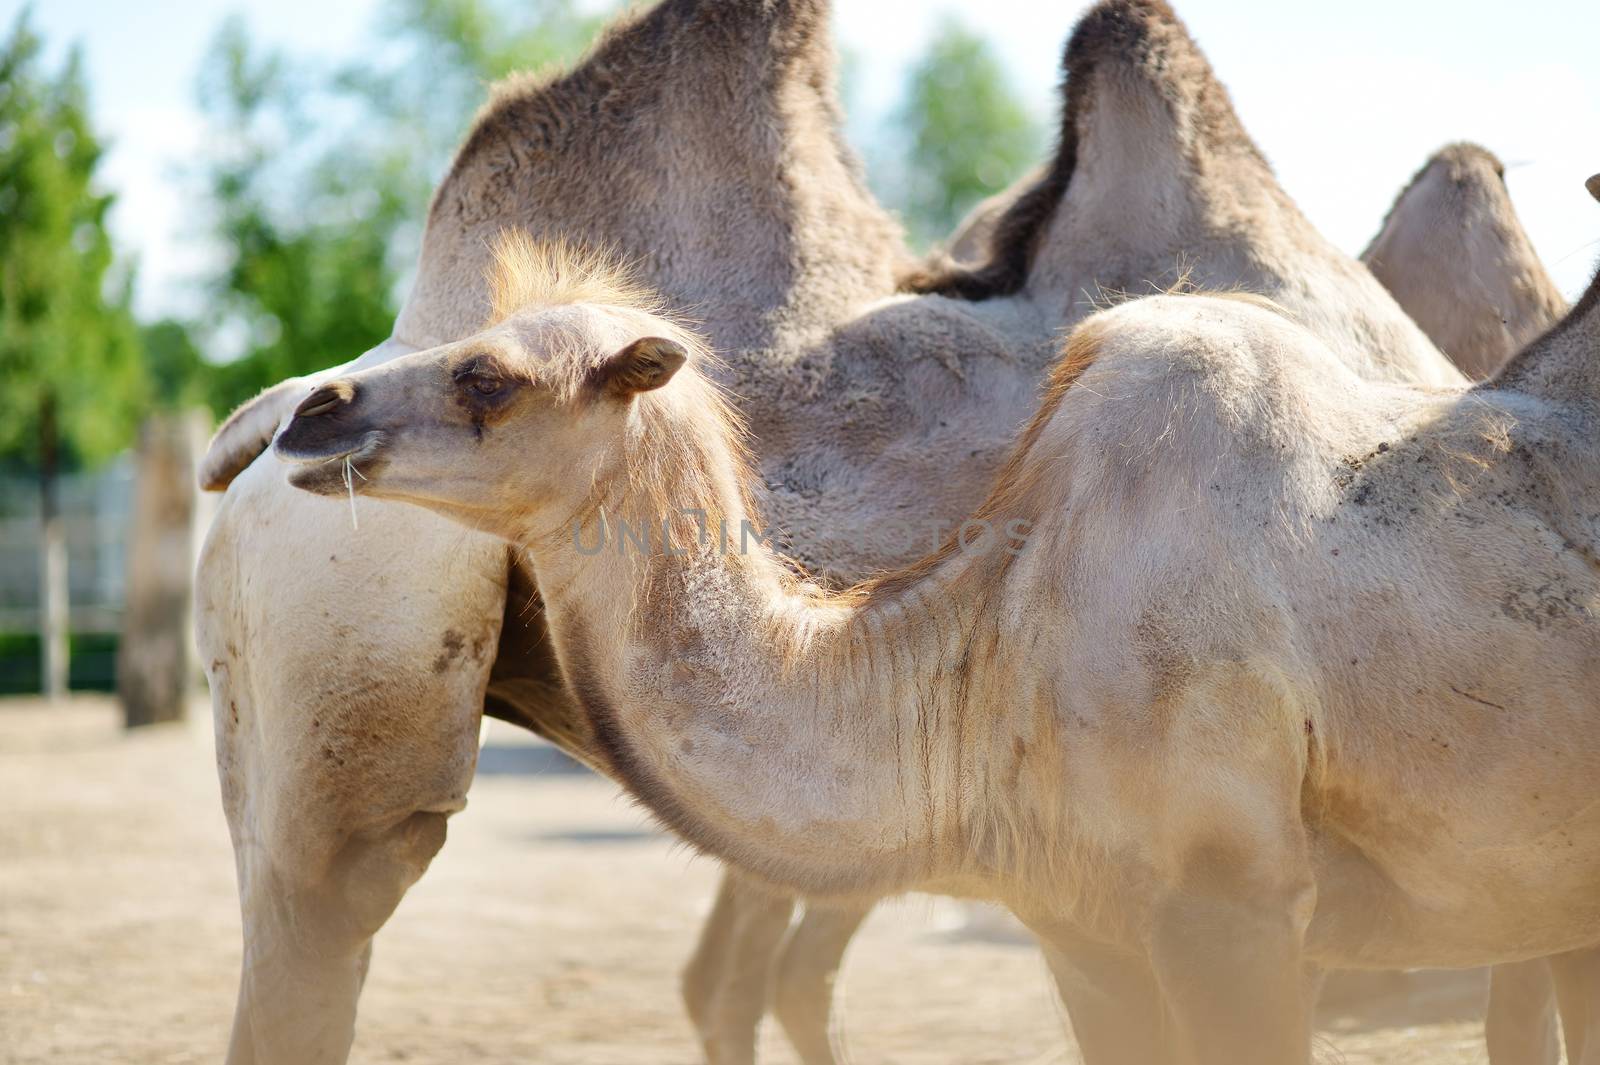 Camel at the zoo by maximkabb